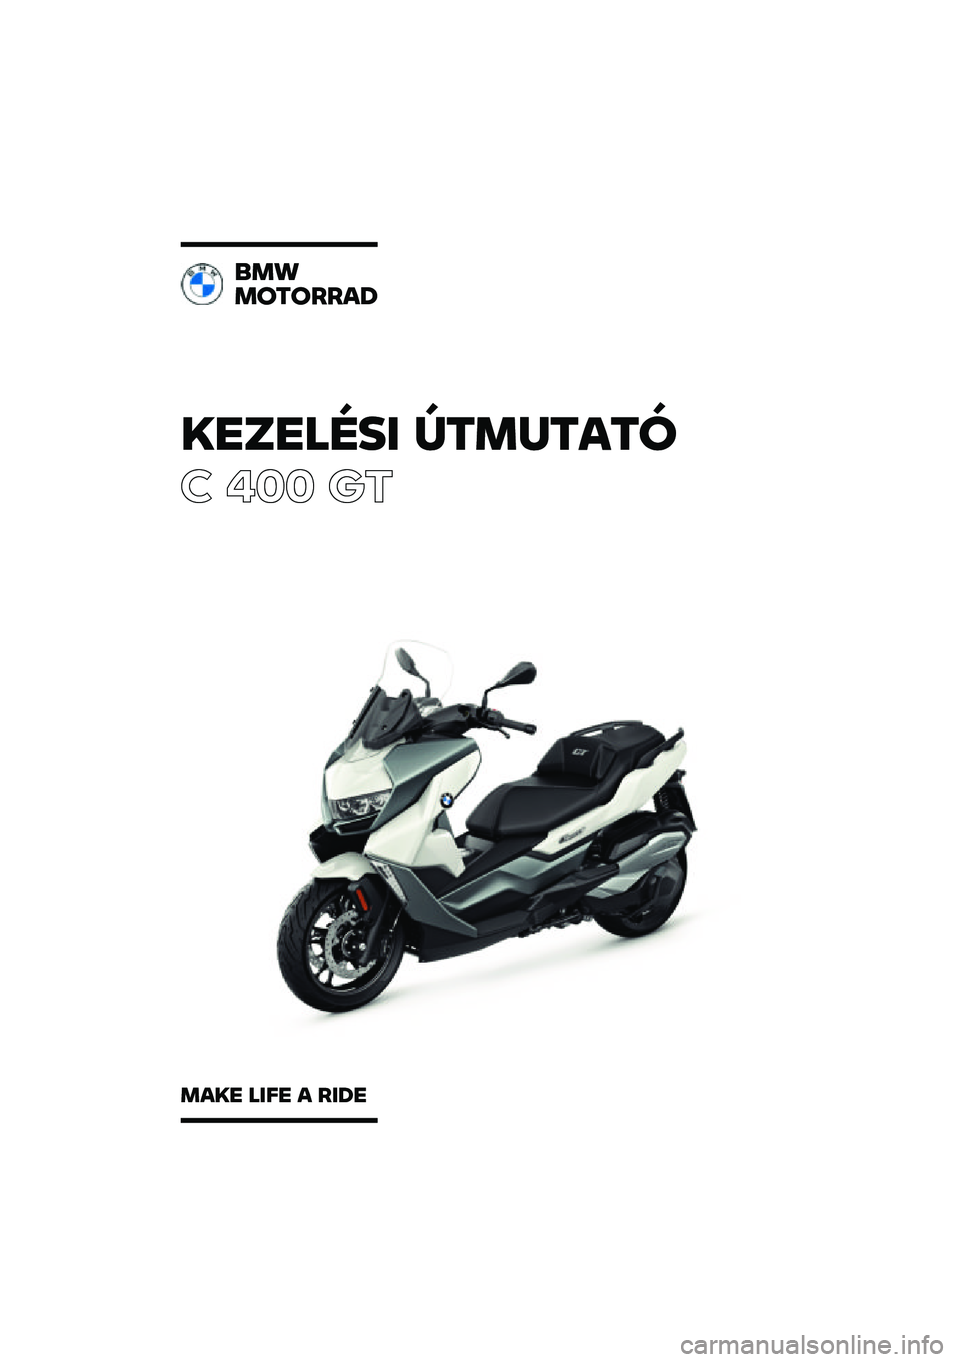 BMW MOTORRAD C 400 GT 2021  Kezelési útmutató (in Hungarian) �������\b�	 �
�\f�
��\f��\f�
� ��� ��\b
��
�
�
��\f�����
�
��� ��	�� � ��	�� 